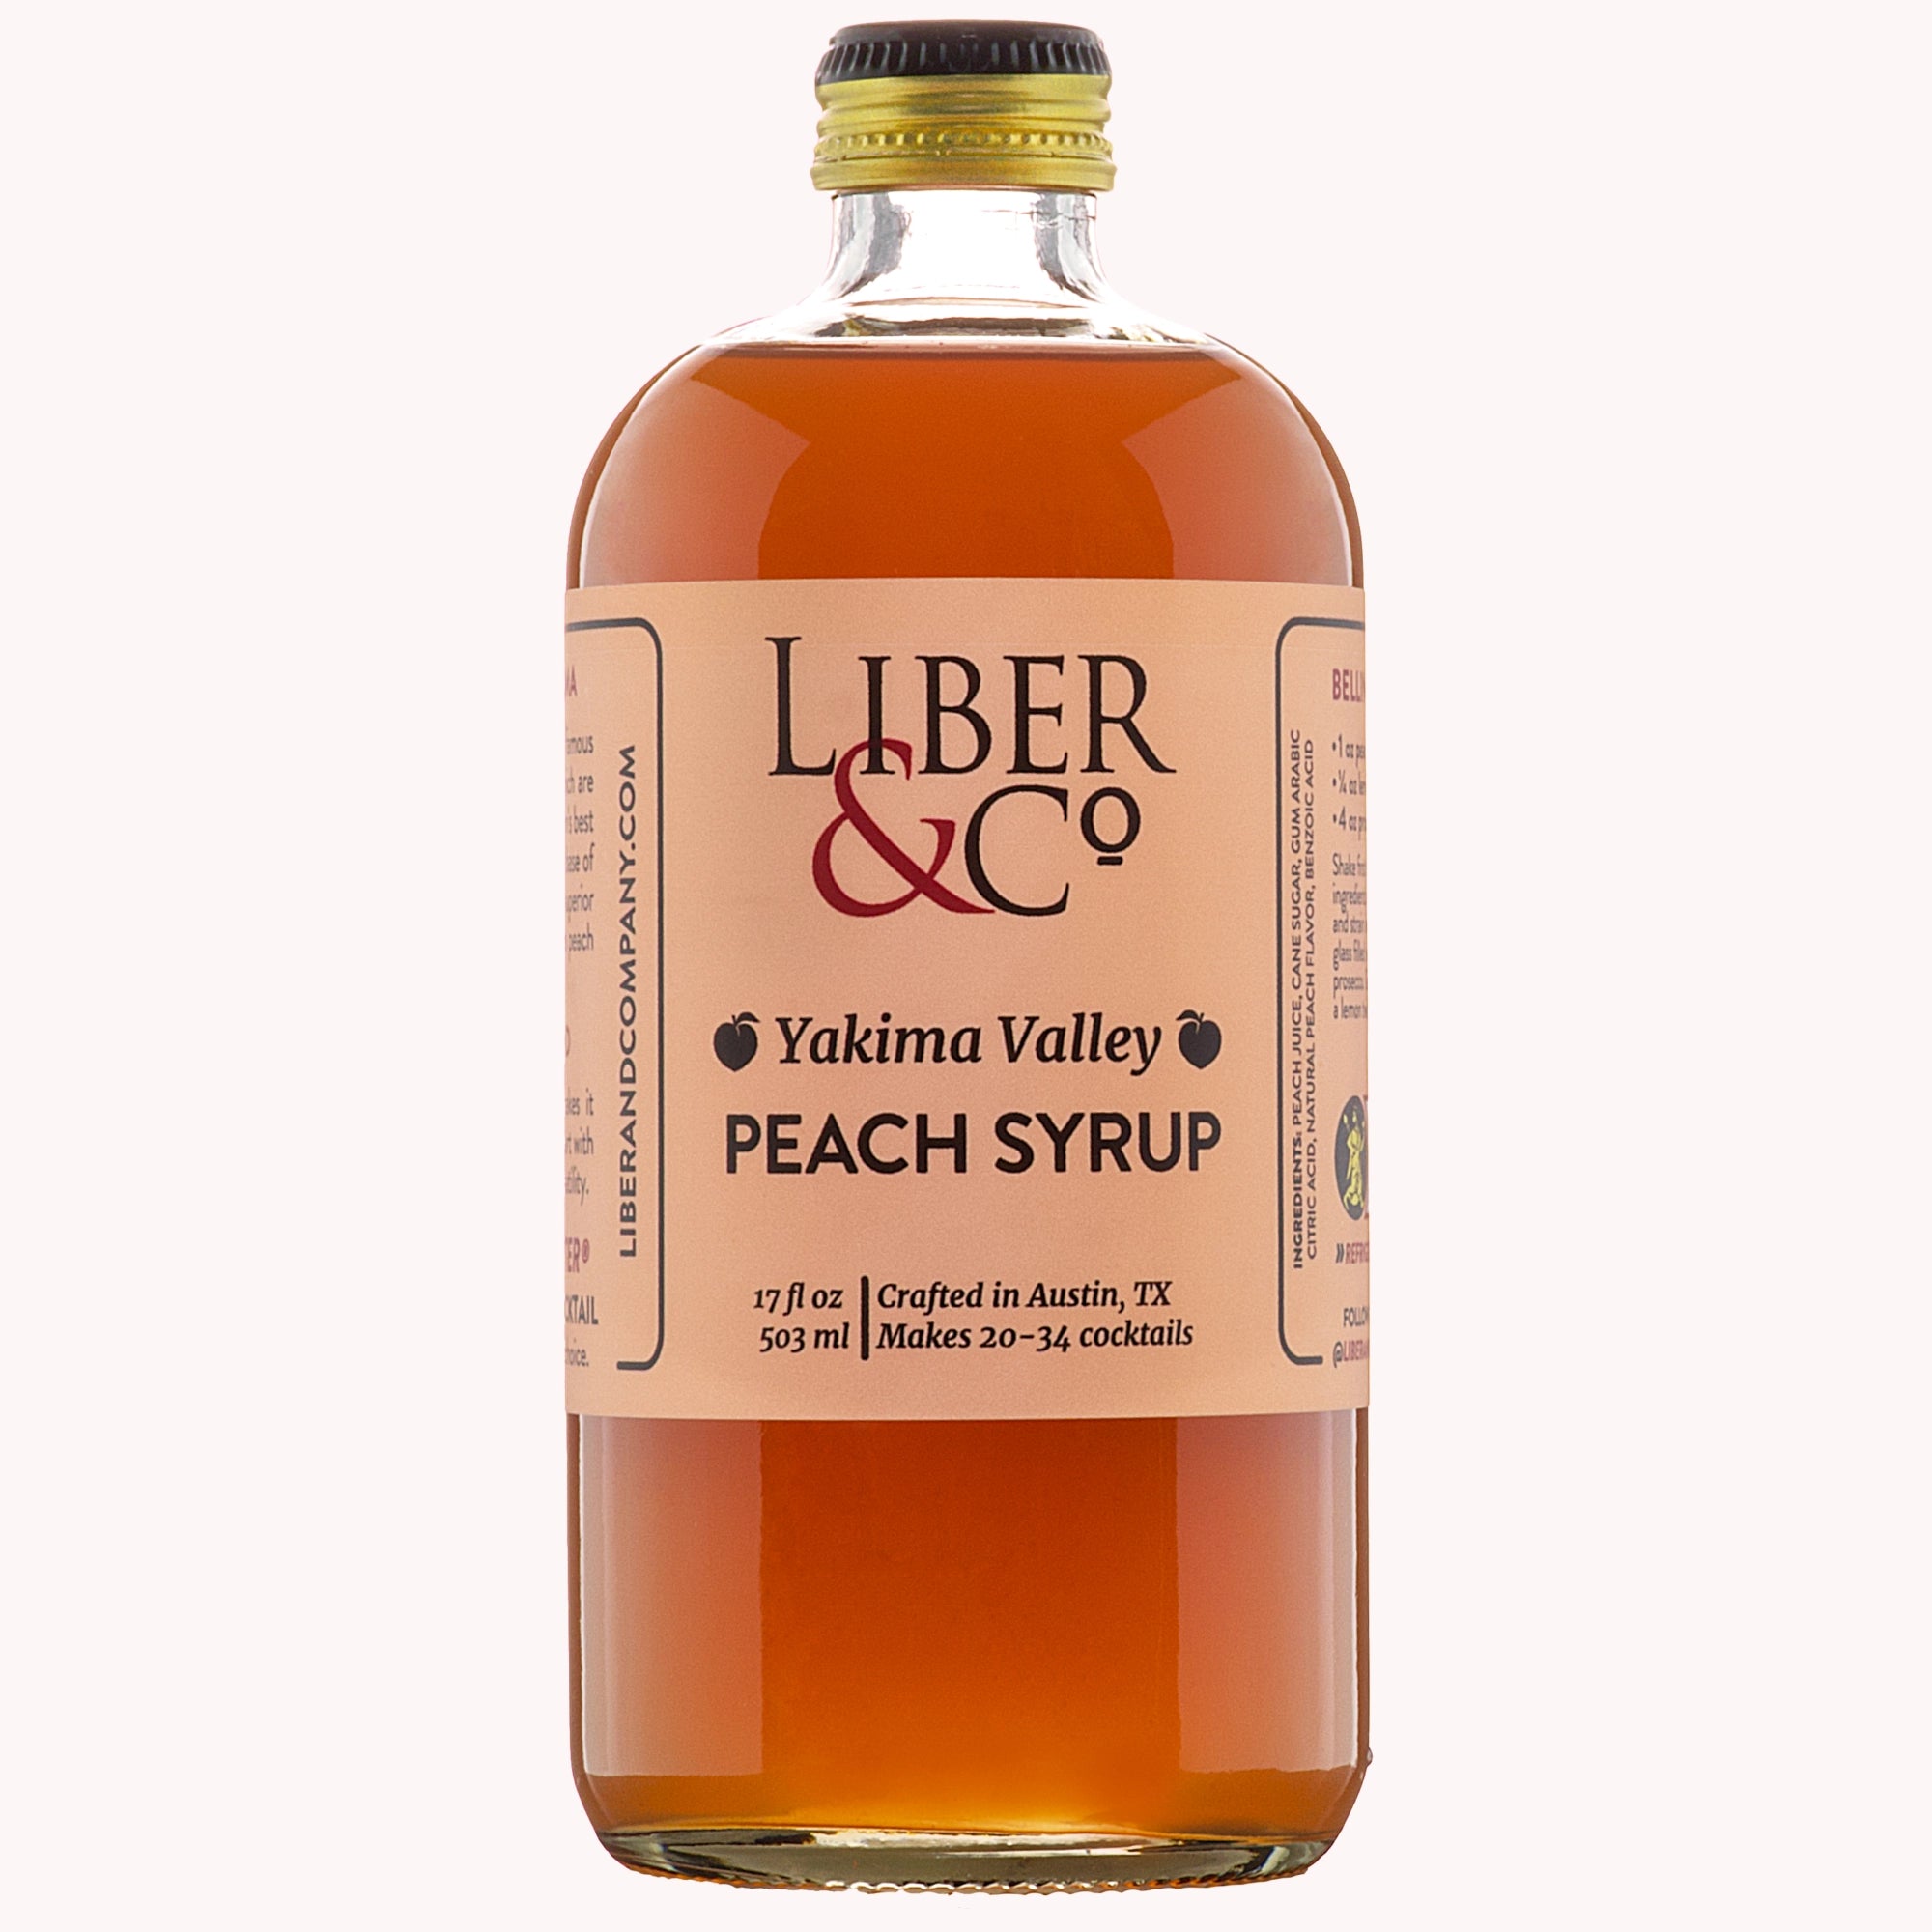 Yakima Valley Peach Syrup